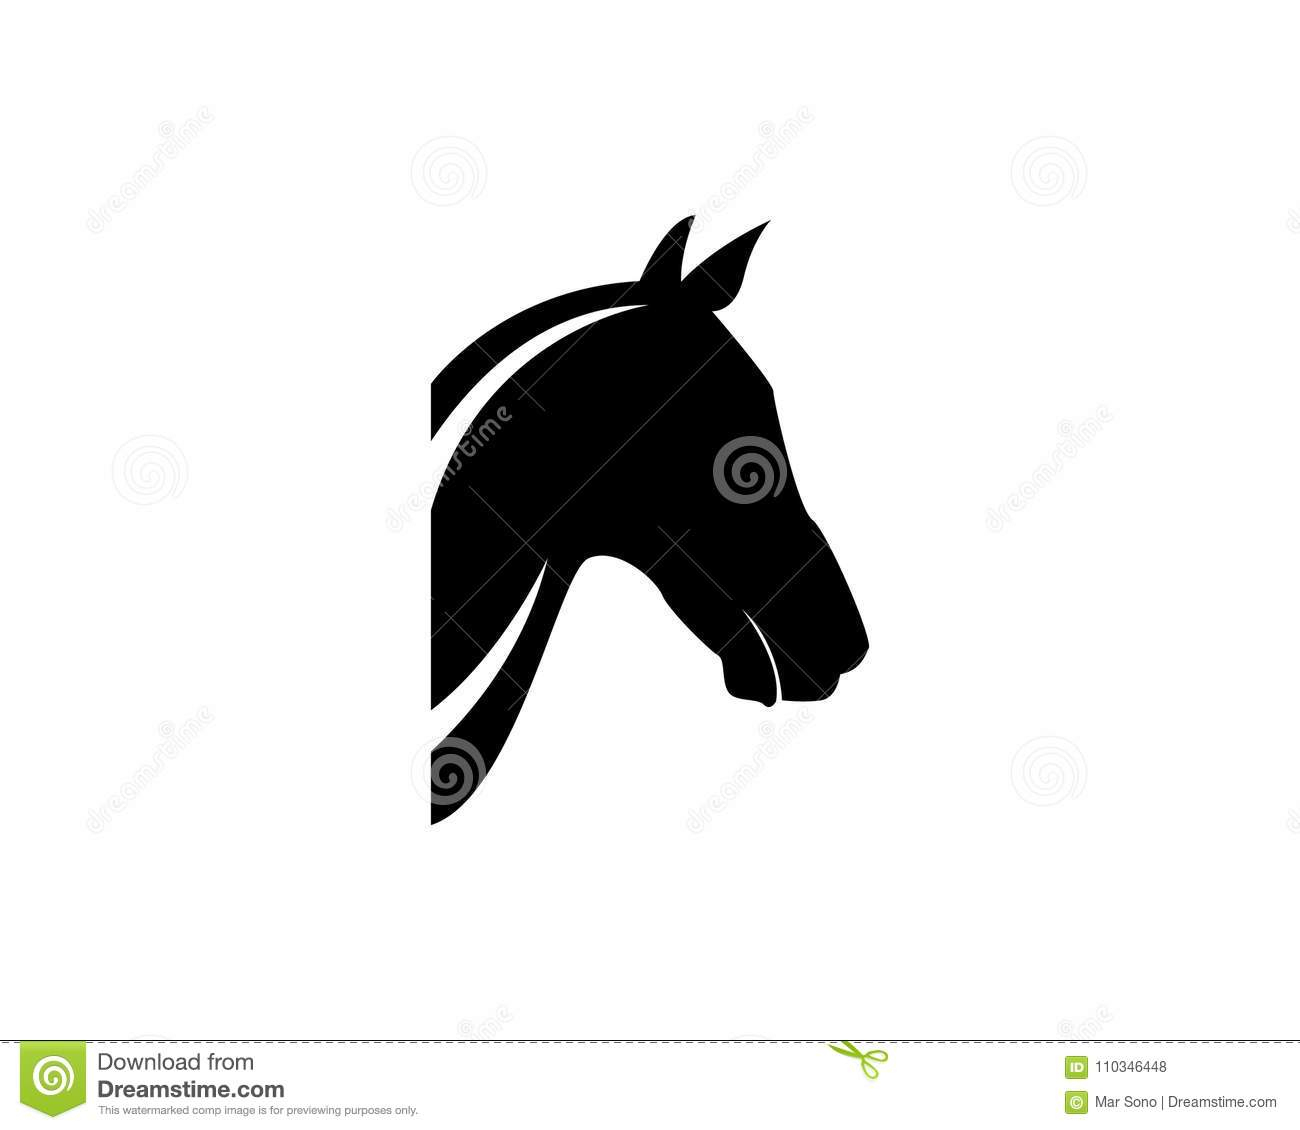 Pferdekopf-Logo Template Vector-Ikonen-App Vektor Abbildung für Pferdekopf Vorlage